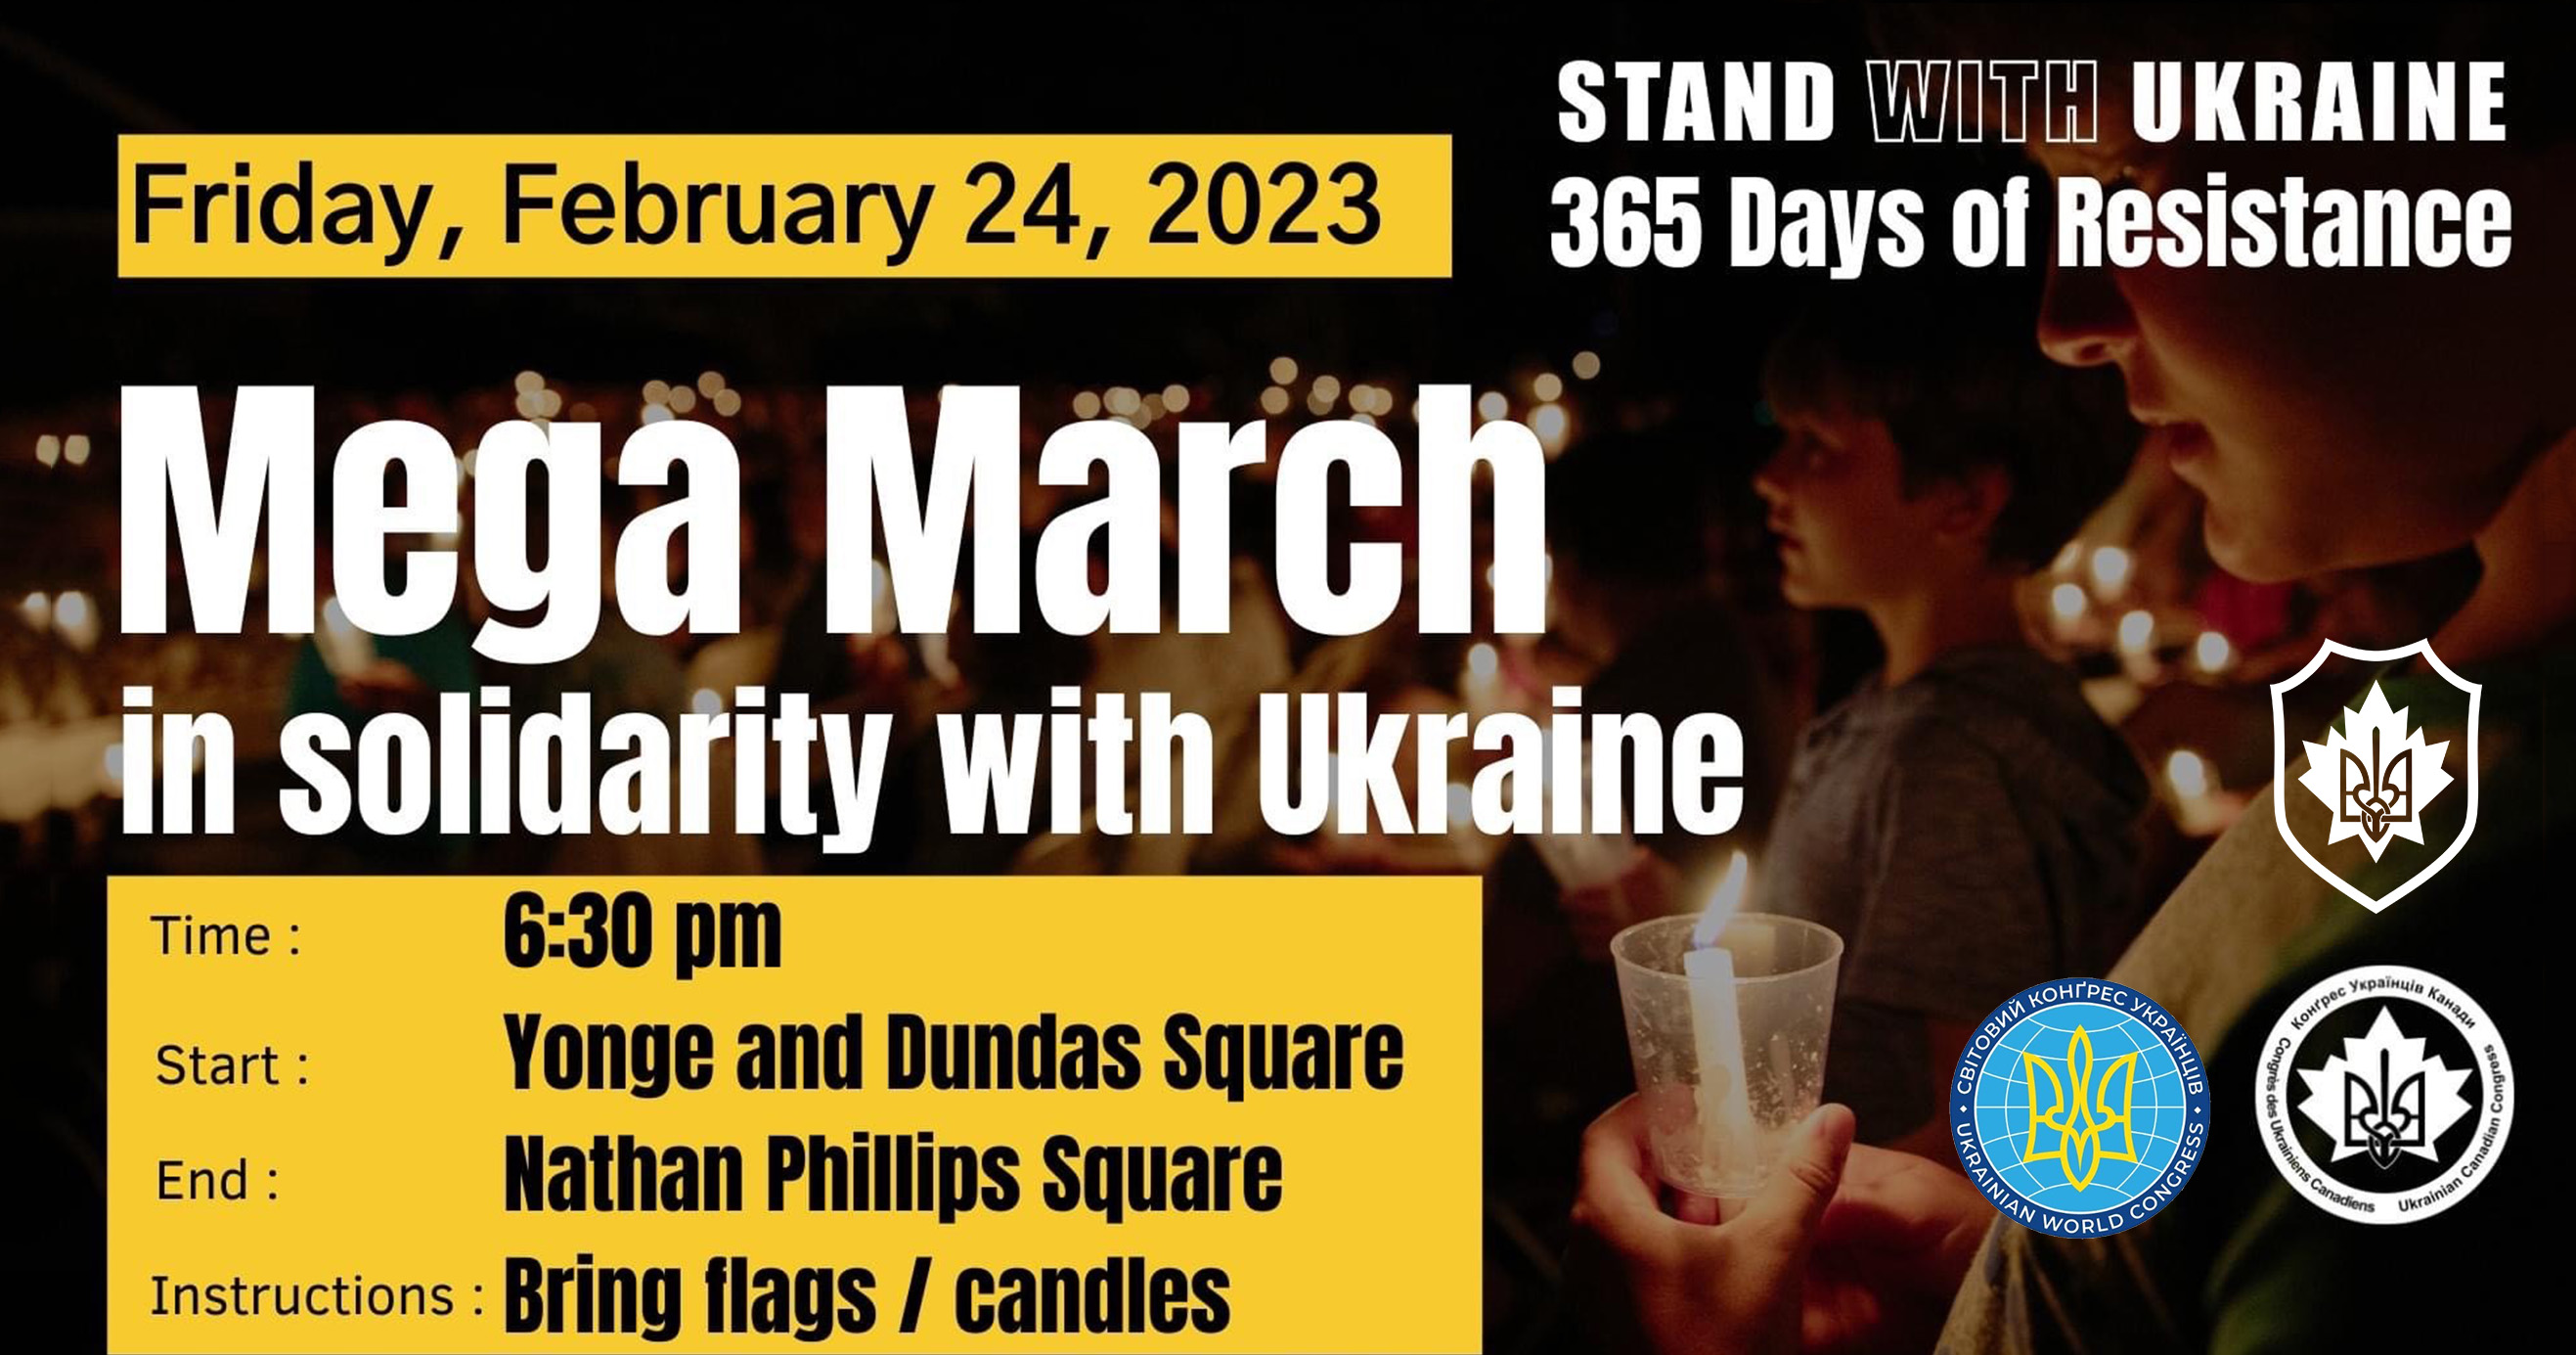 PROTEST Mega March for Ukraine Feb. 24 NEW